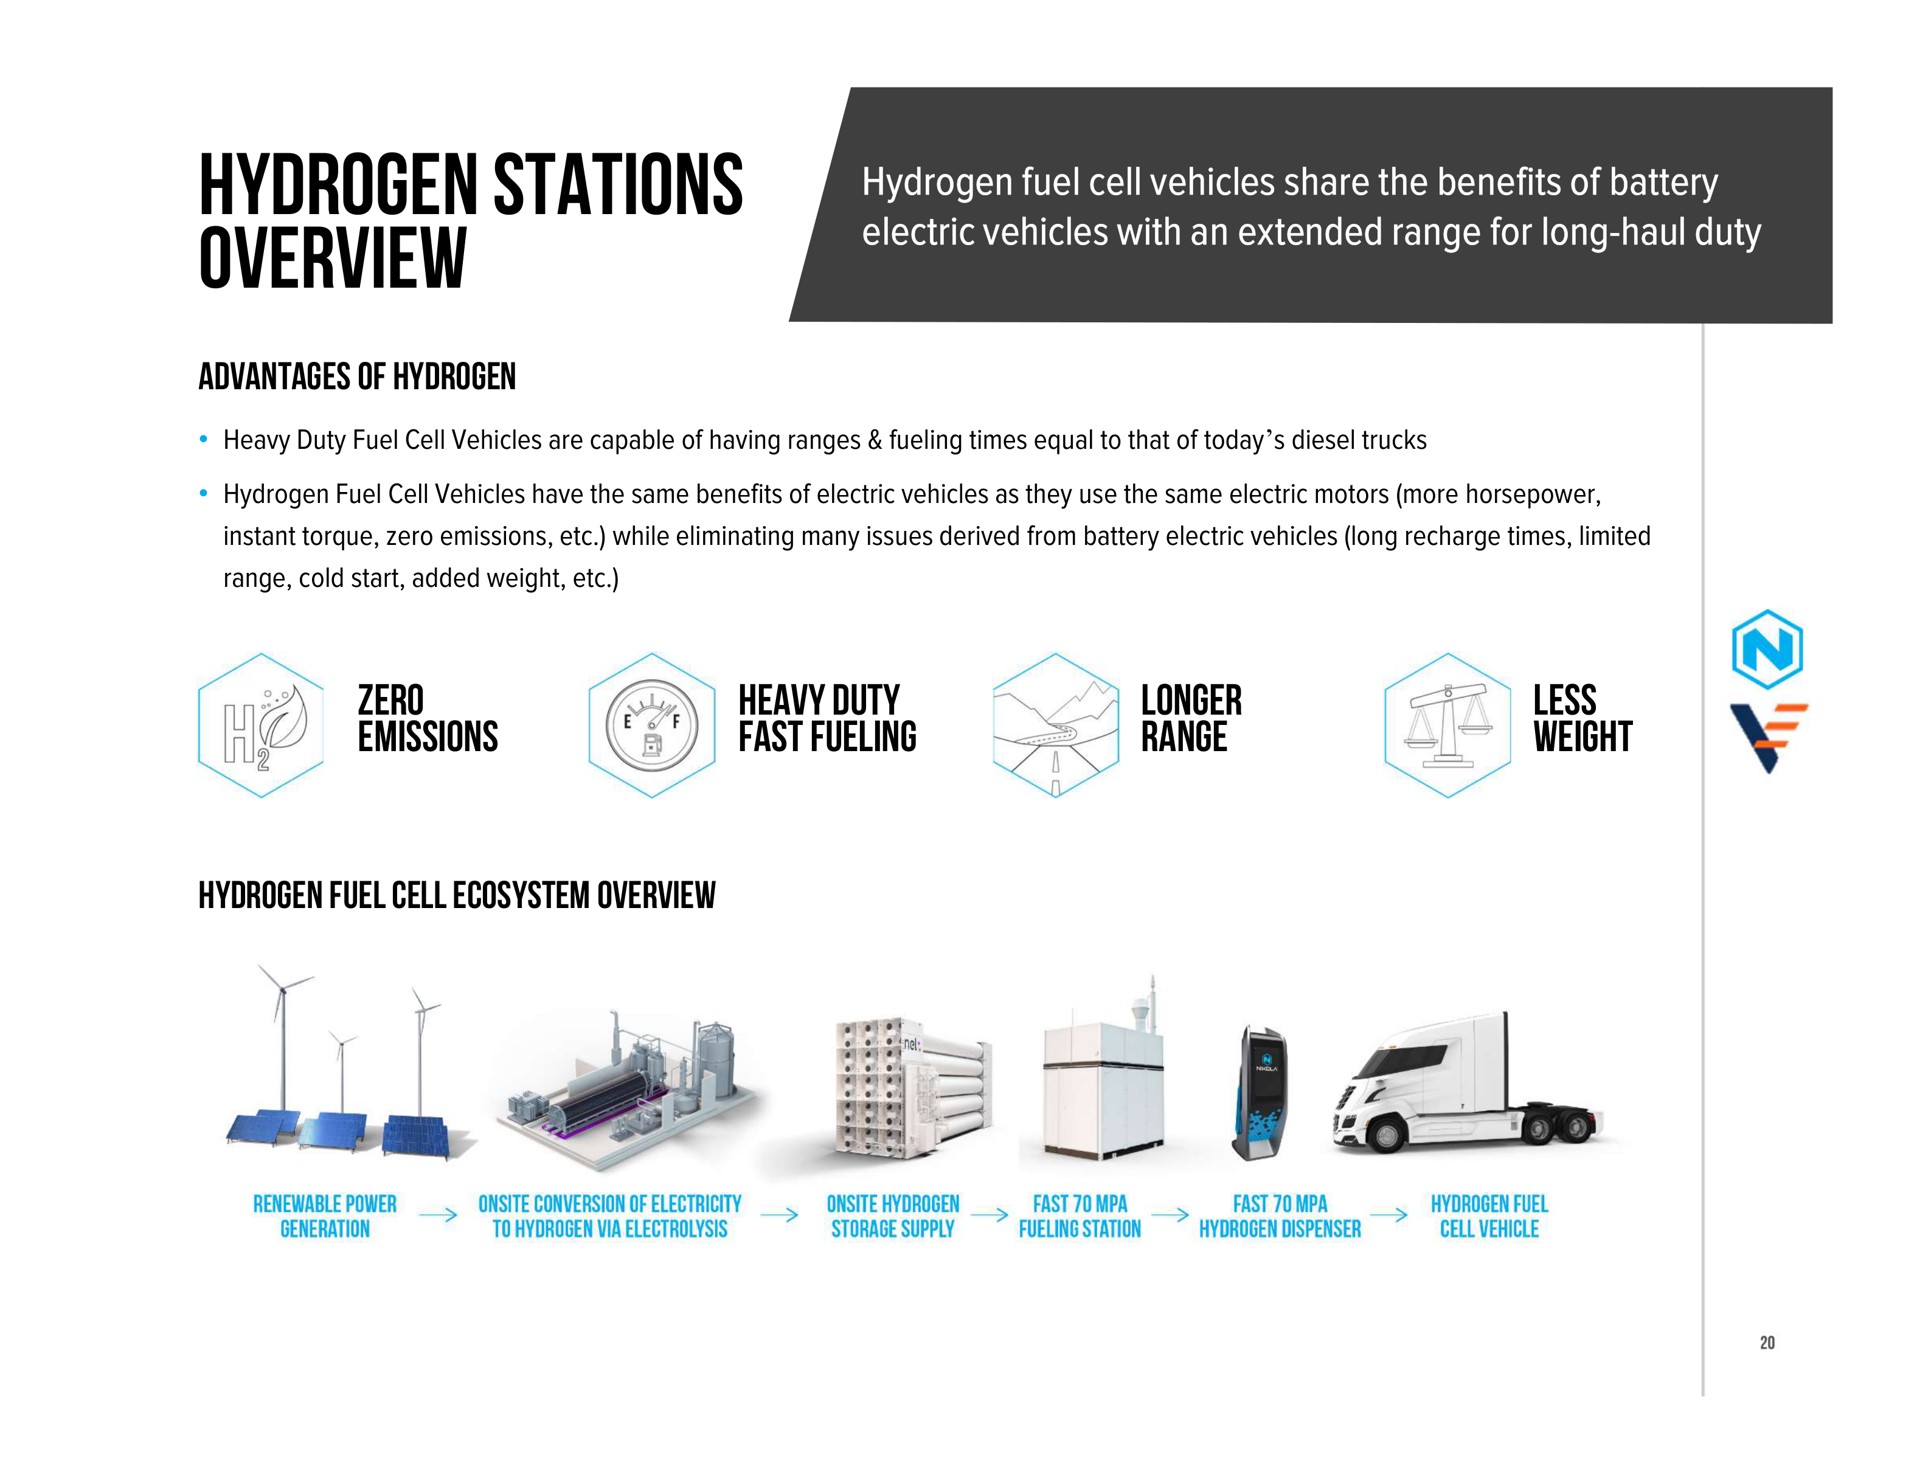 hydrogen stations overview zero emissions heavy duty fast fueling longer range less weight | Nikola